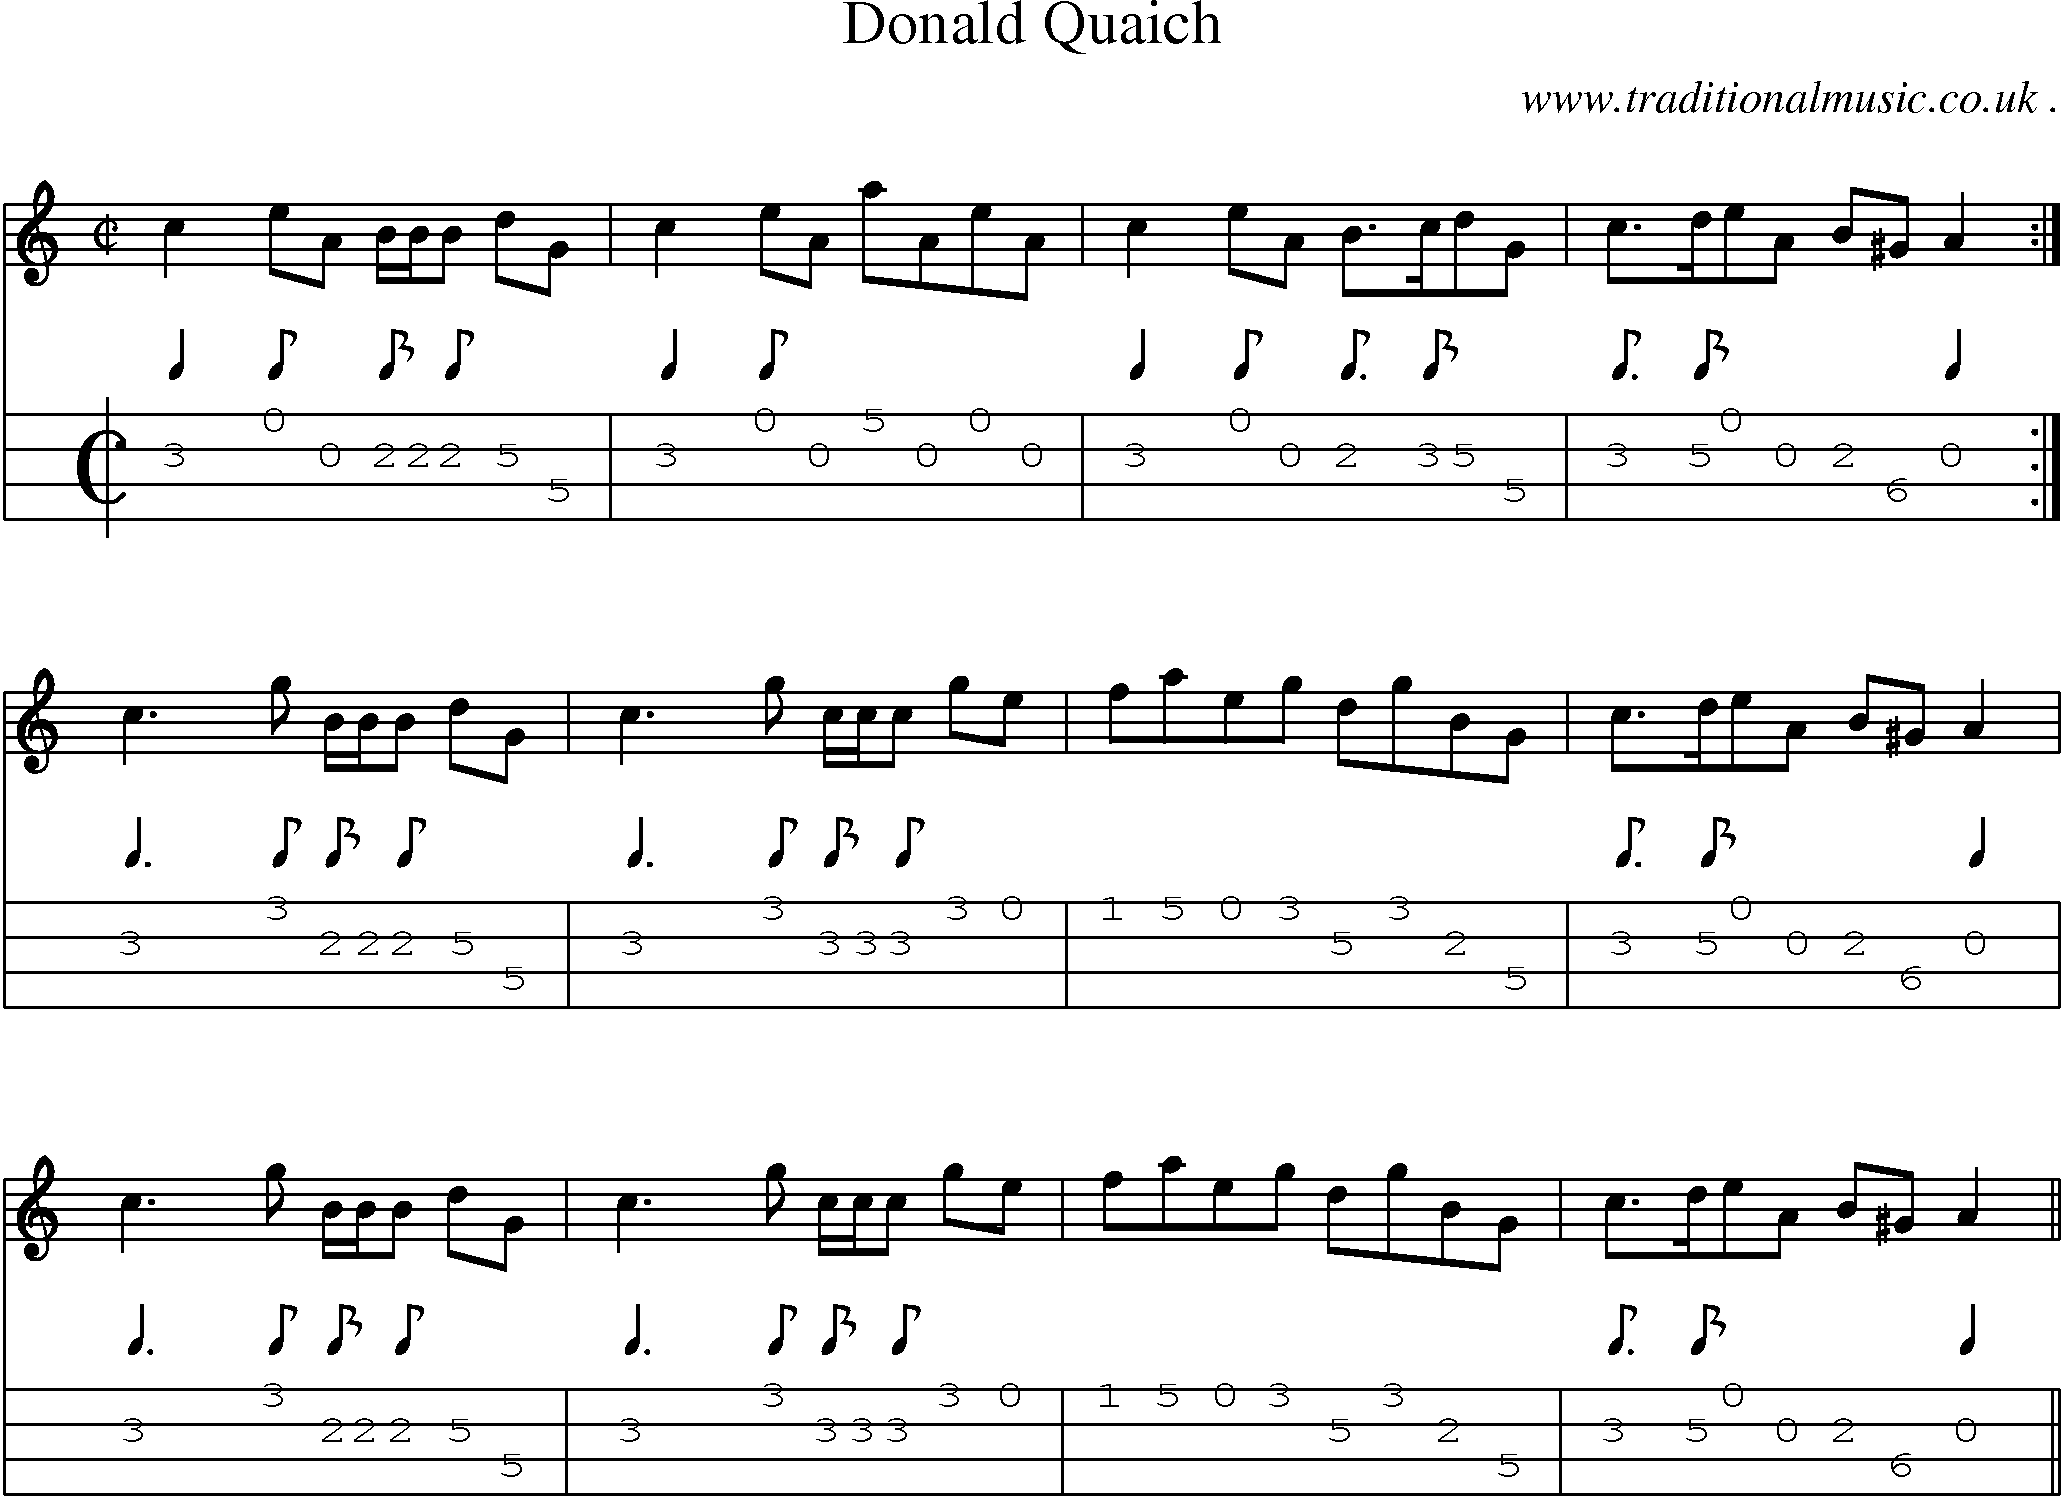 Sheet-music  score, Chords and Mandolin Tabs for Donald Quaich